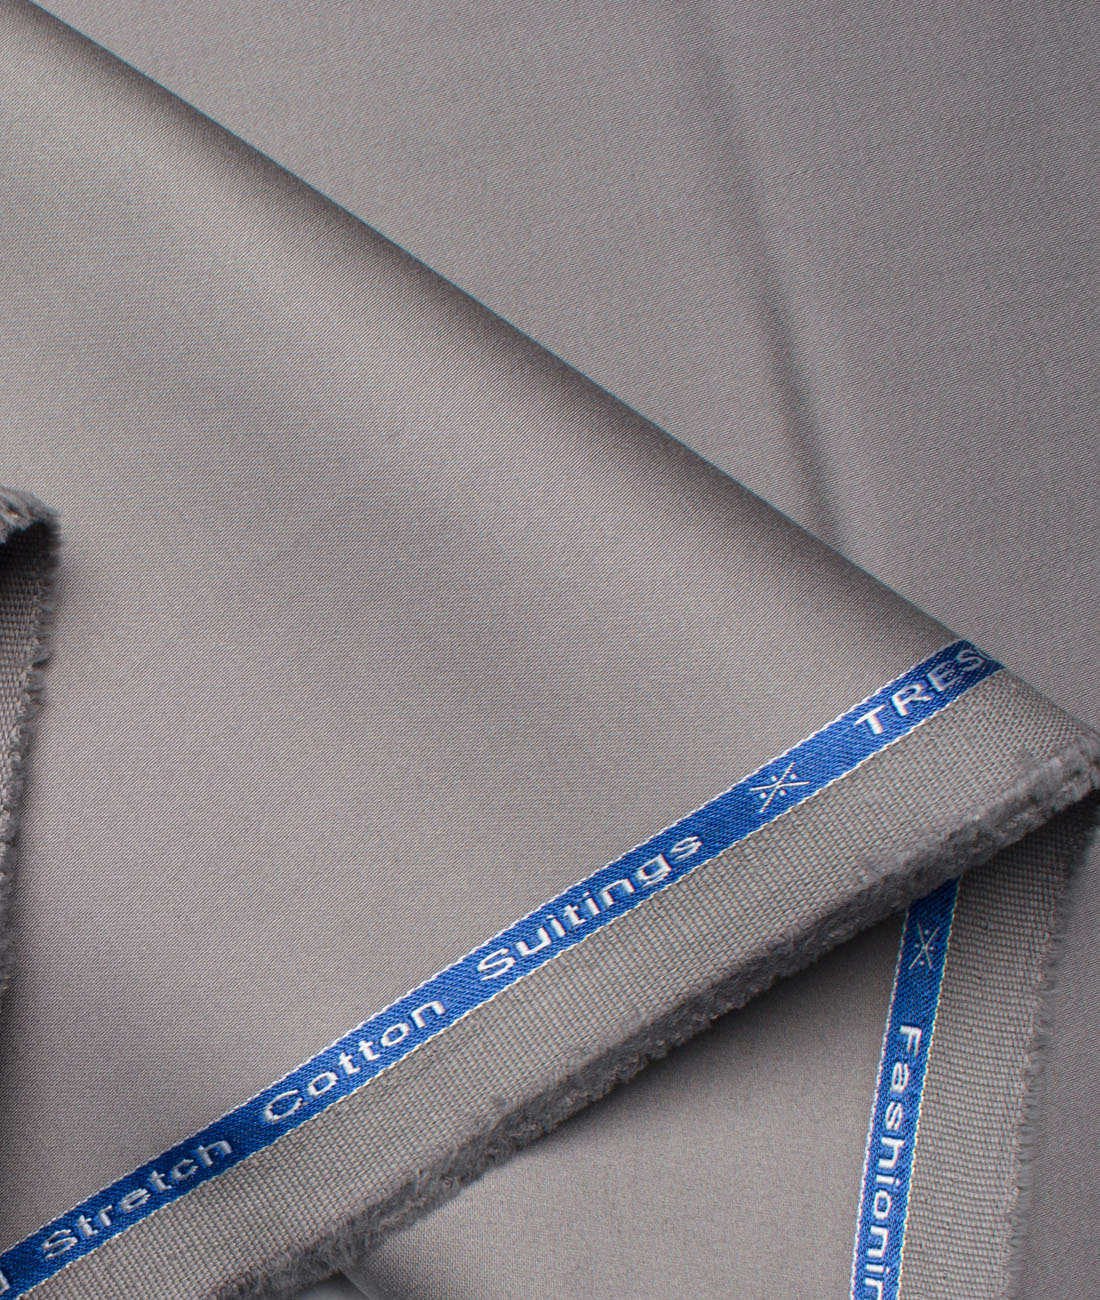 Blue Multi Lines Design  Unstitched Trouser Fabric  Stitchless